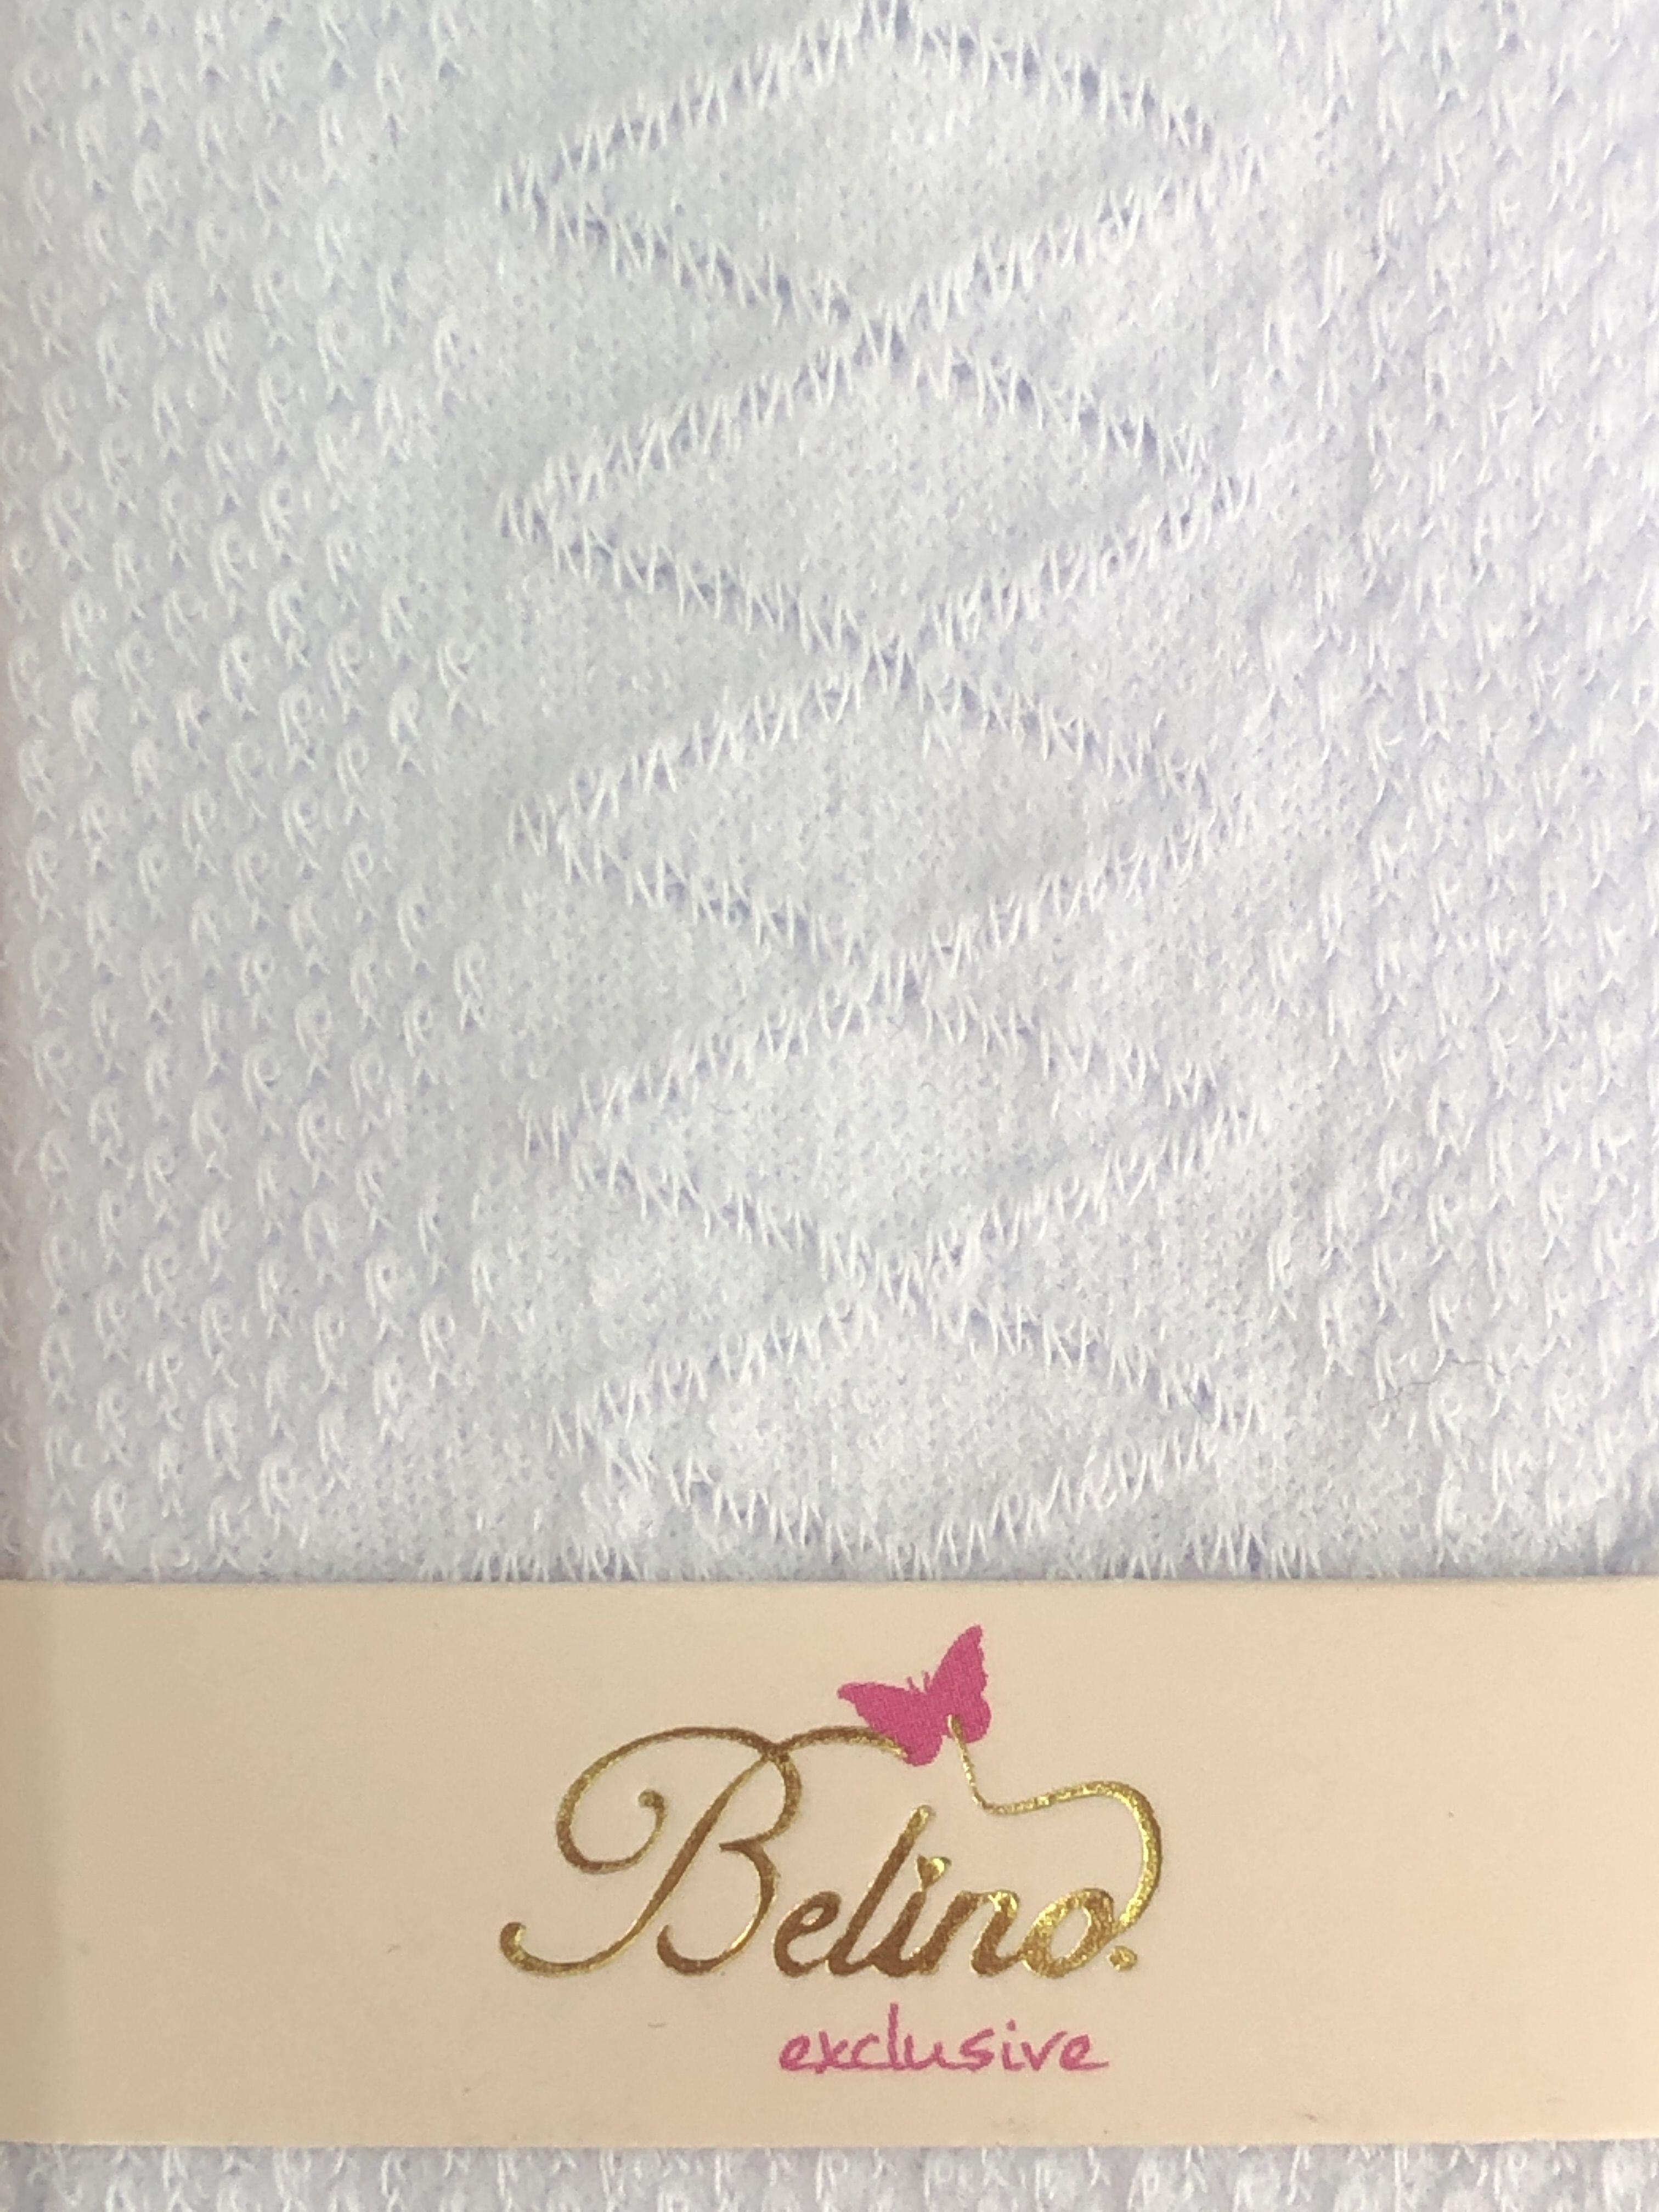 картинка Belino / Колготки цвет : белый exclusive от магазина Одежда+